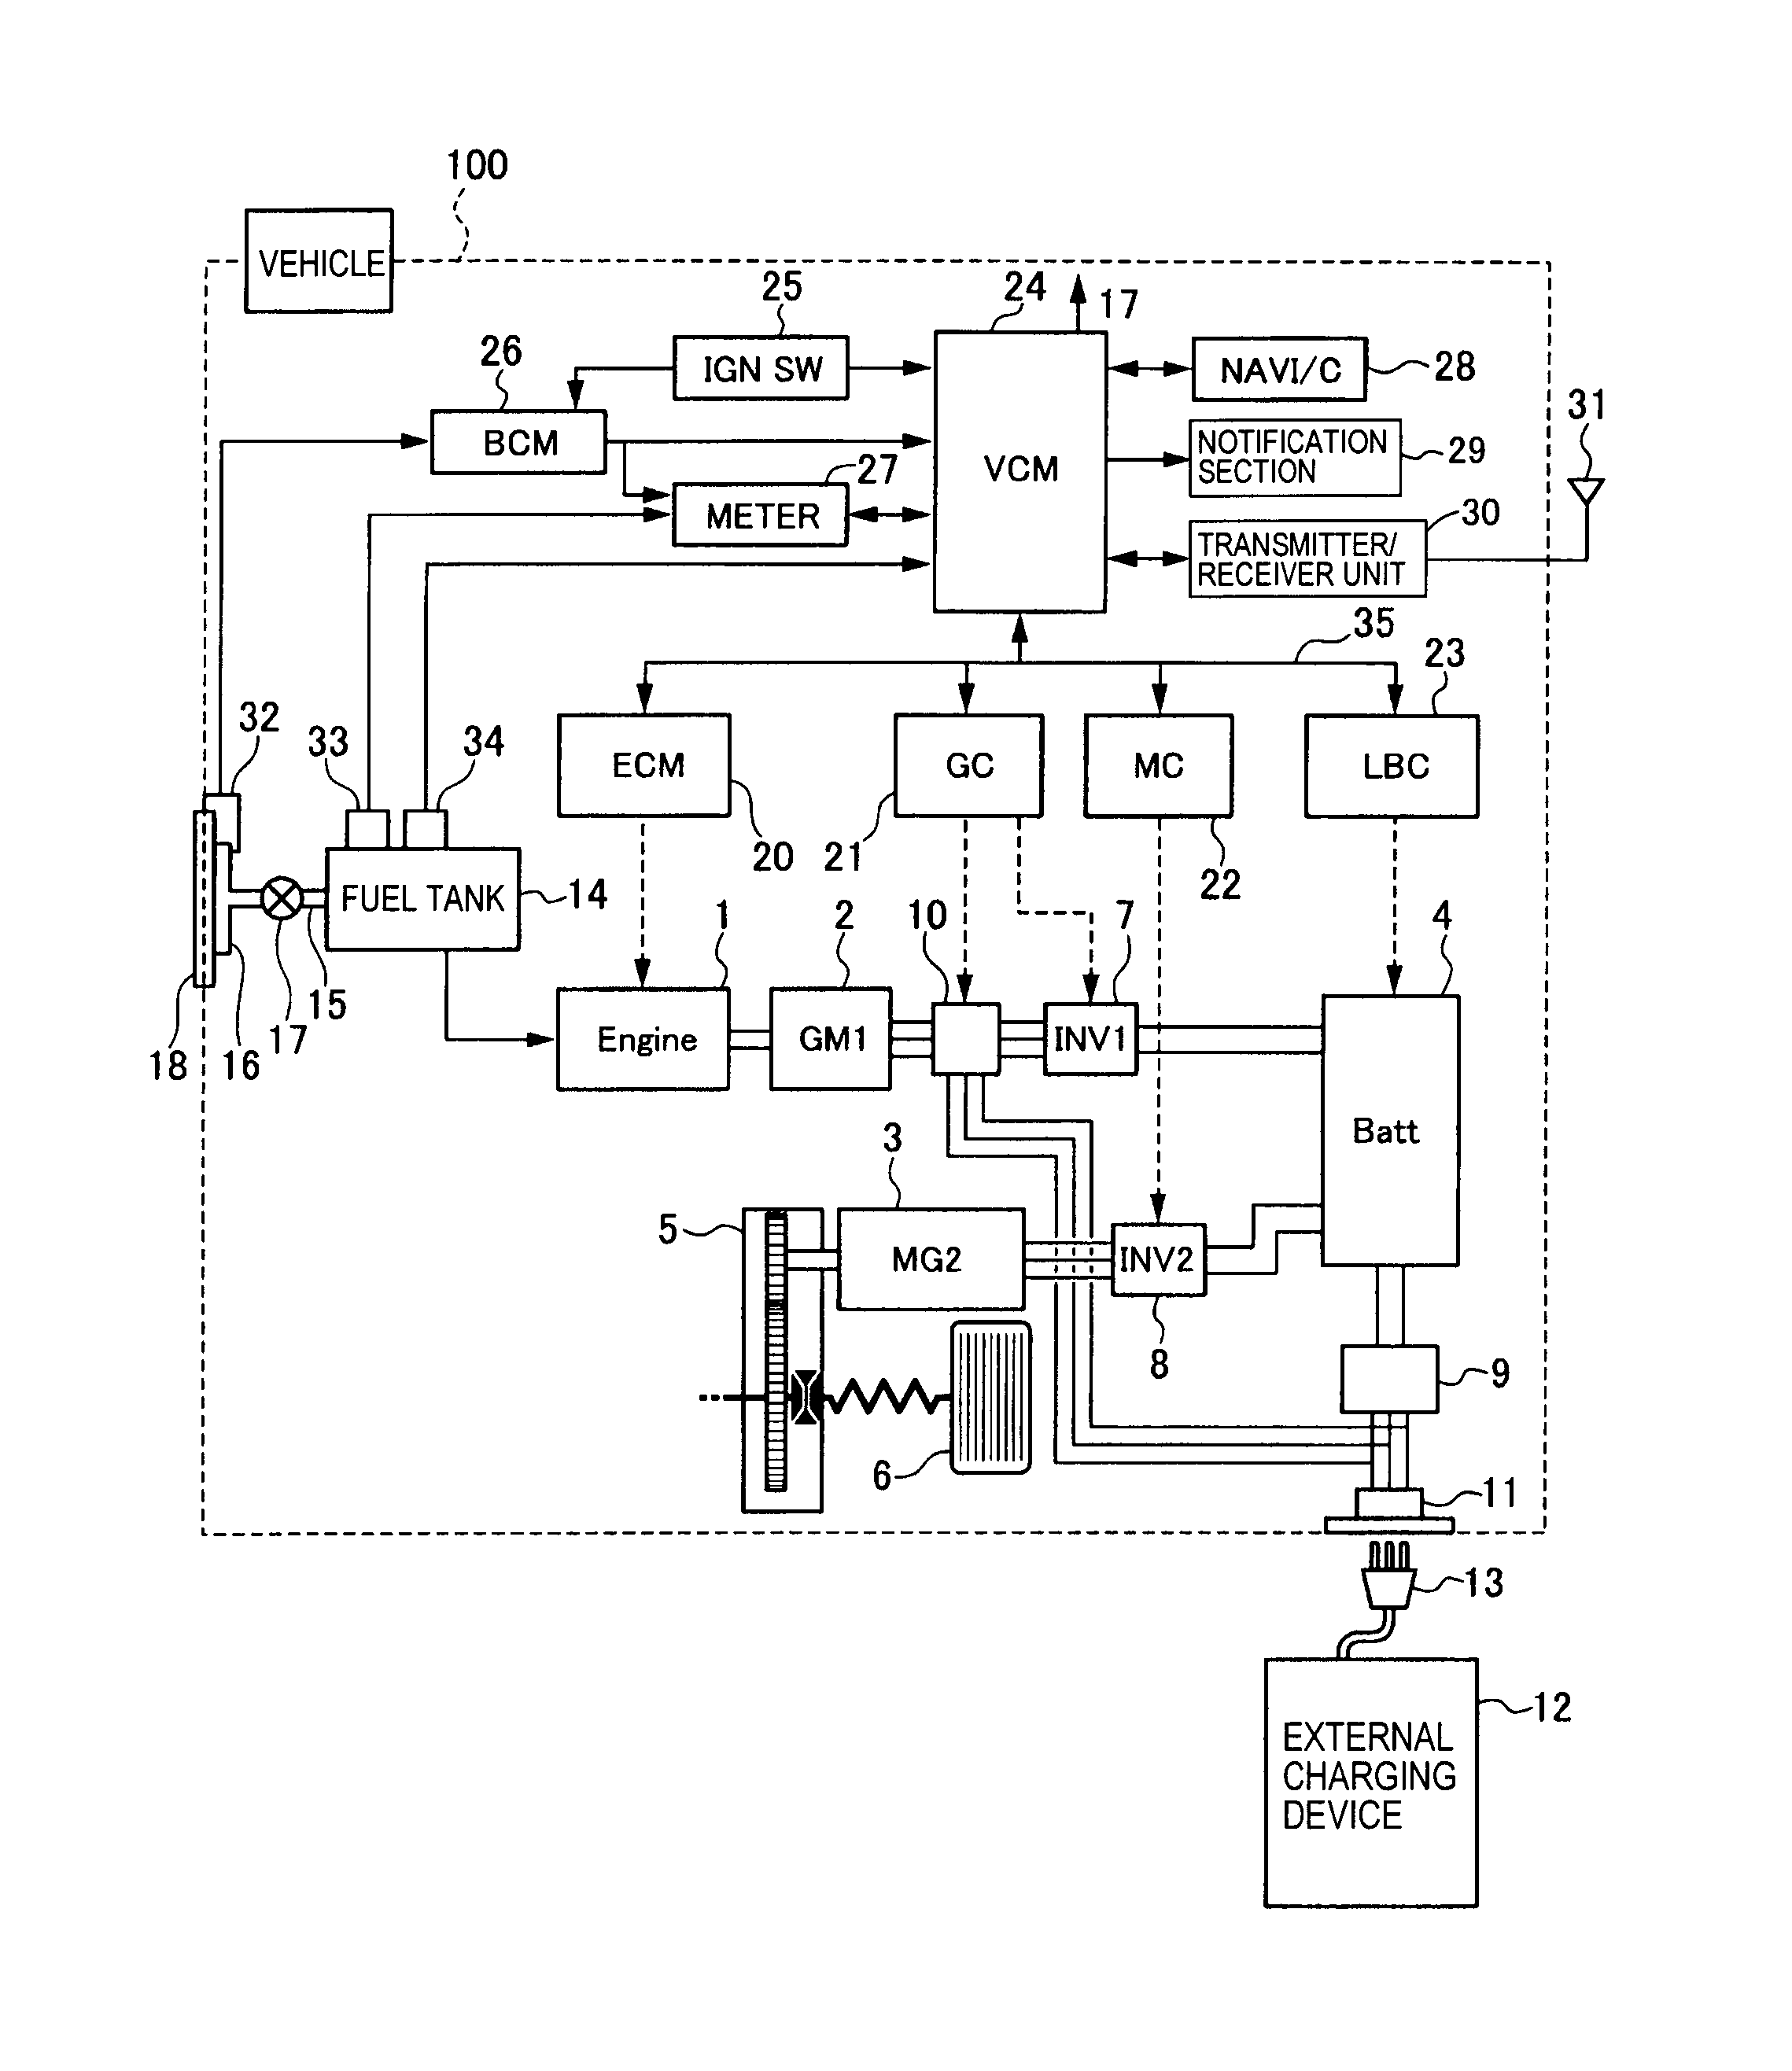 coleman wiring diagram 534050